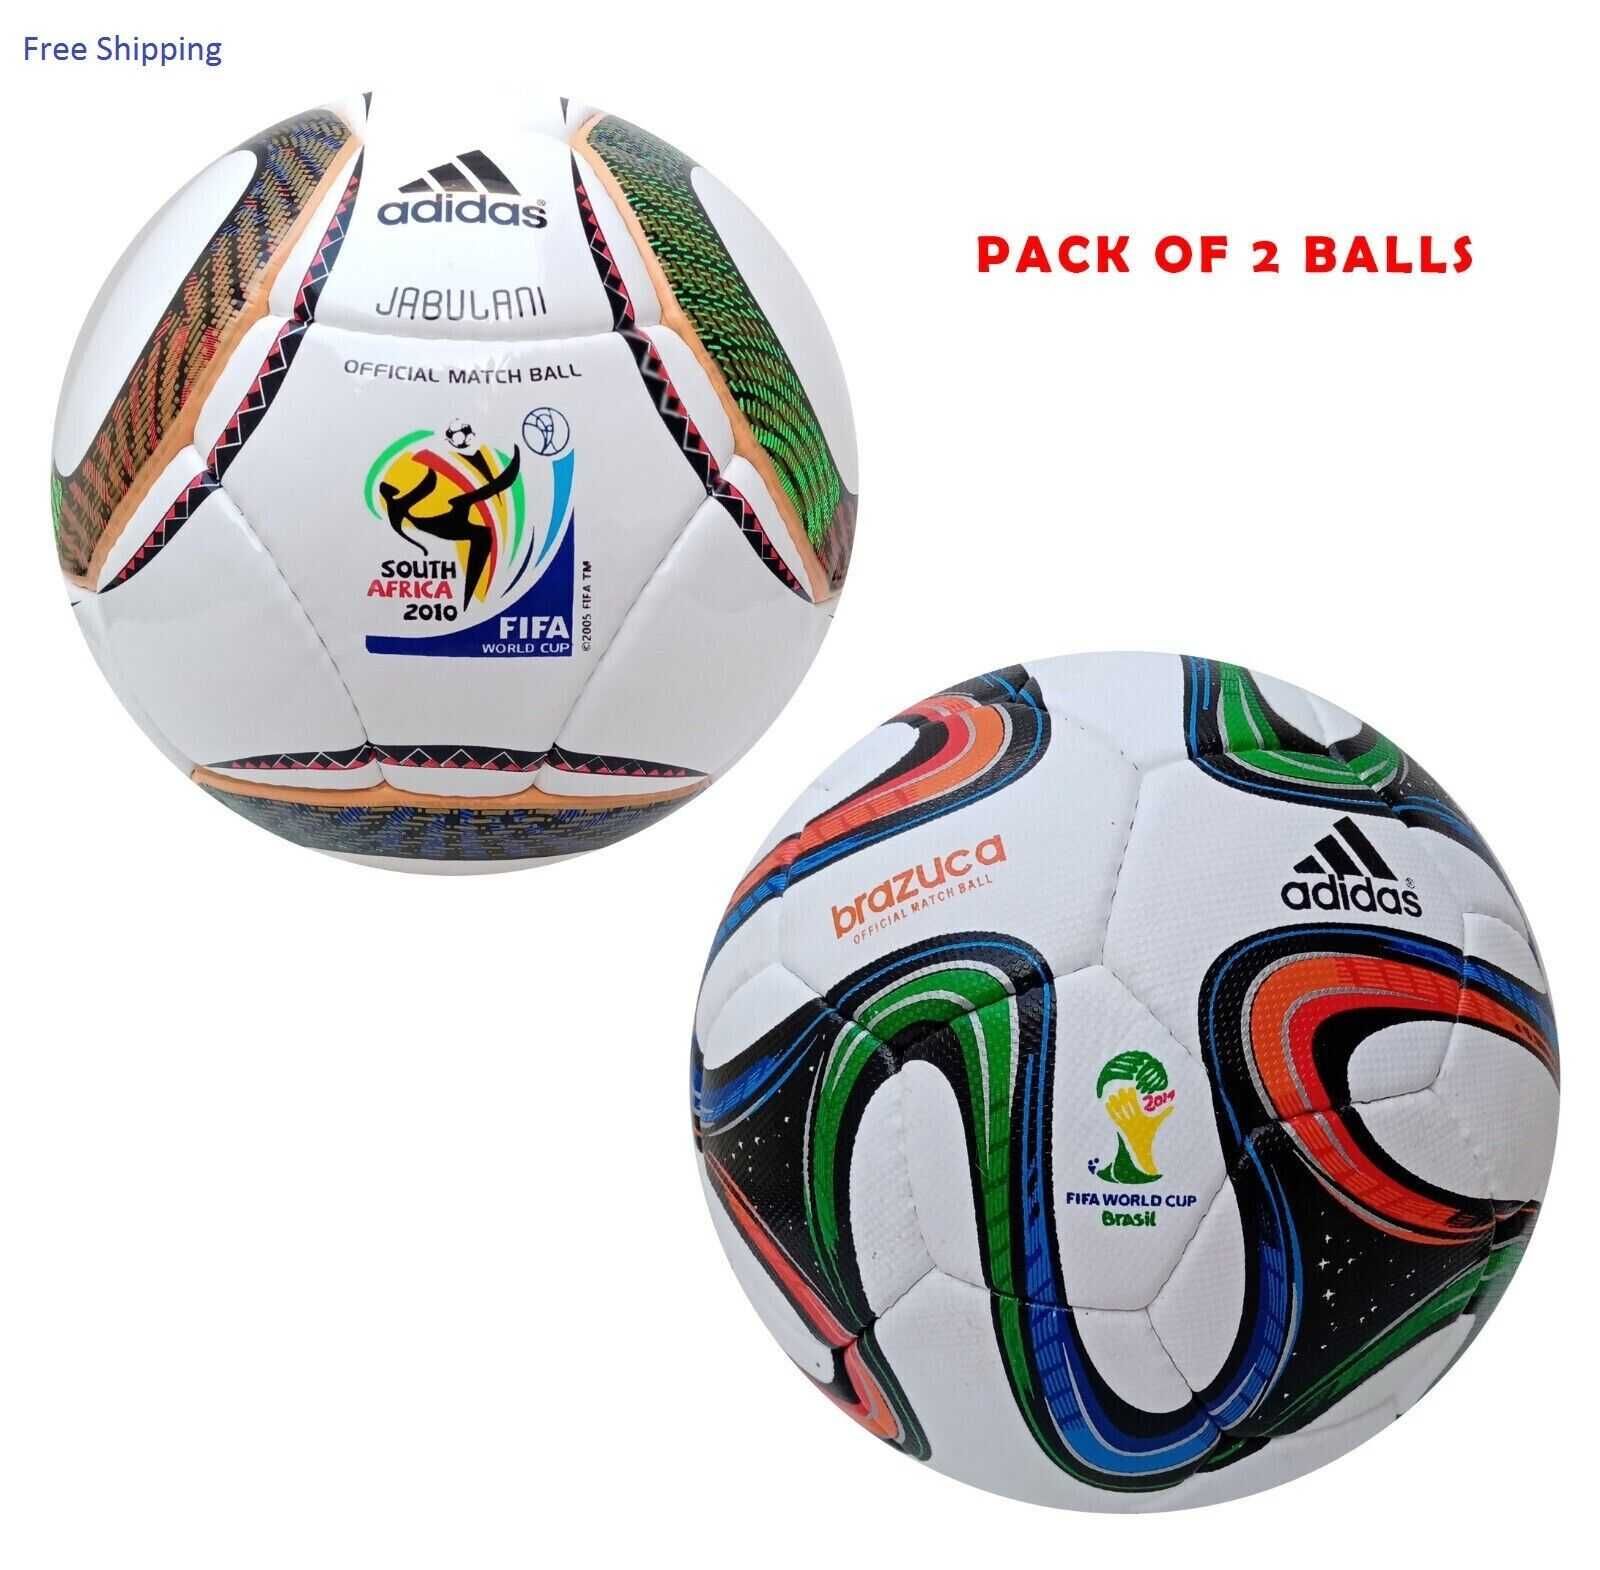 Adidas Jabulani 2010 & BRAZUCA 2014 Handstitched Soccer Ball Size